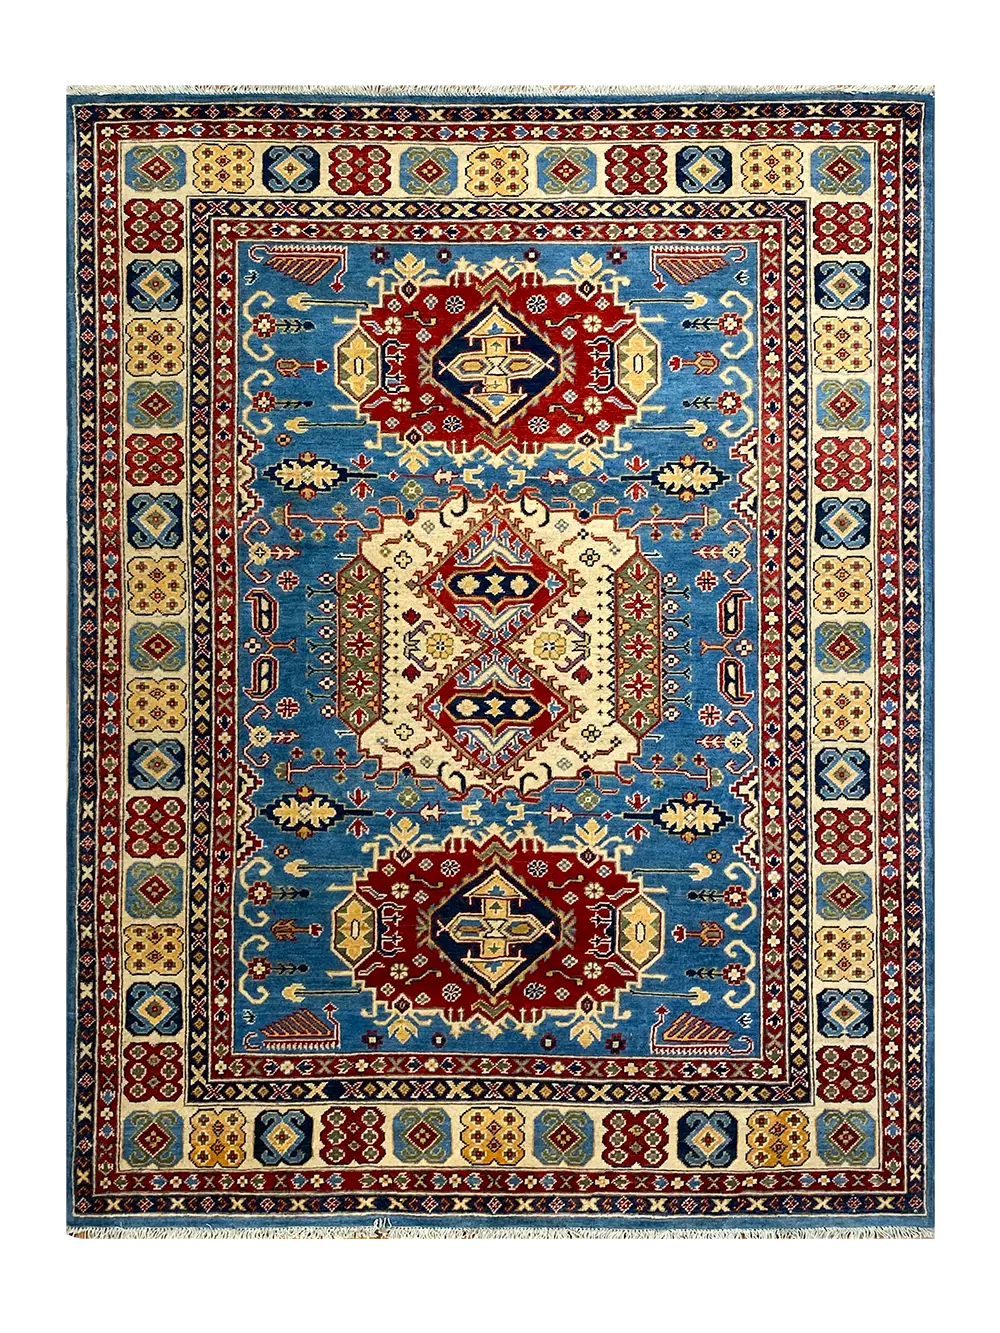 Kazak 6' x 7' 8" Handmade Area Rug